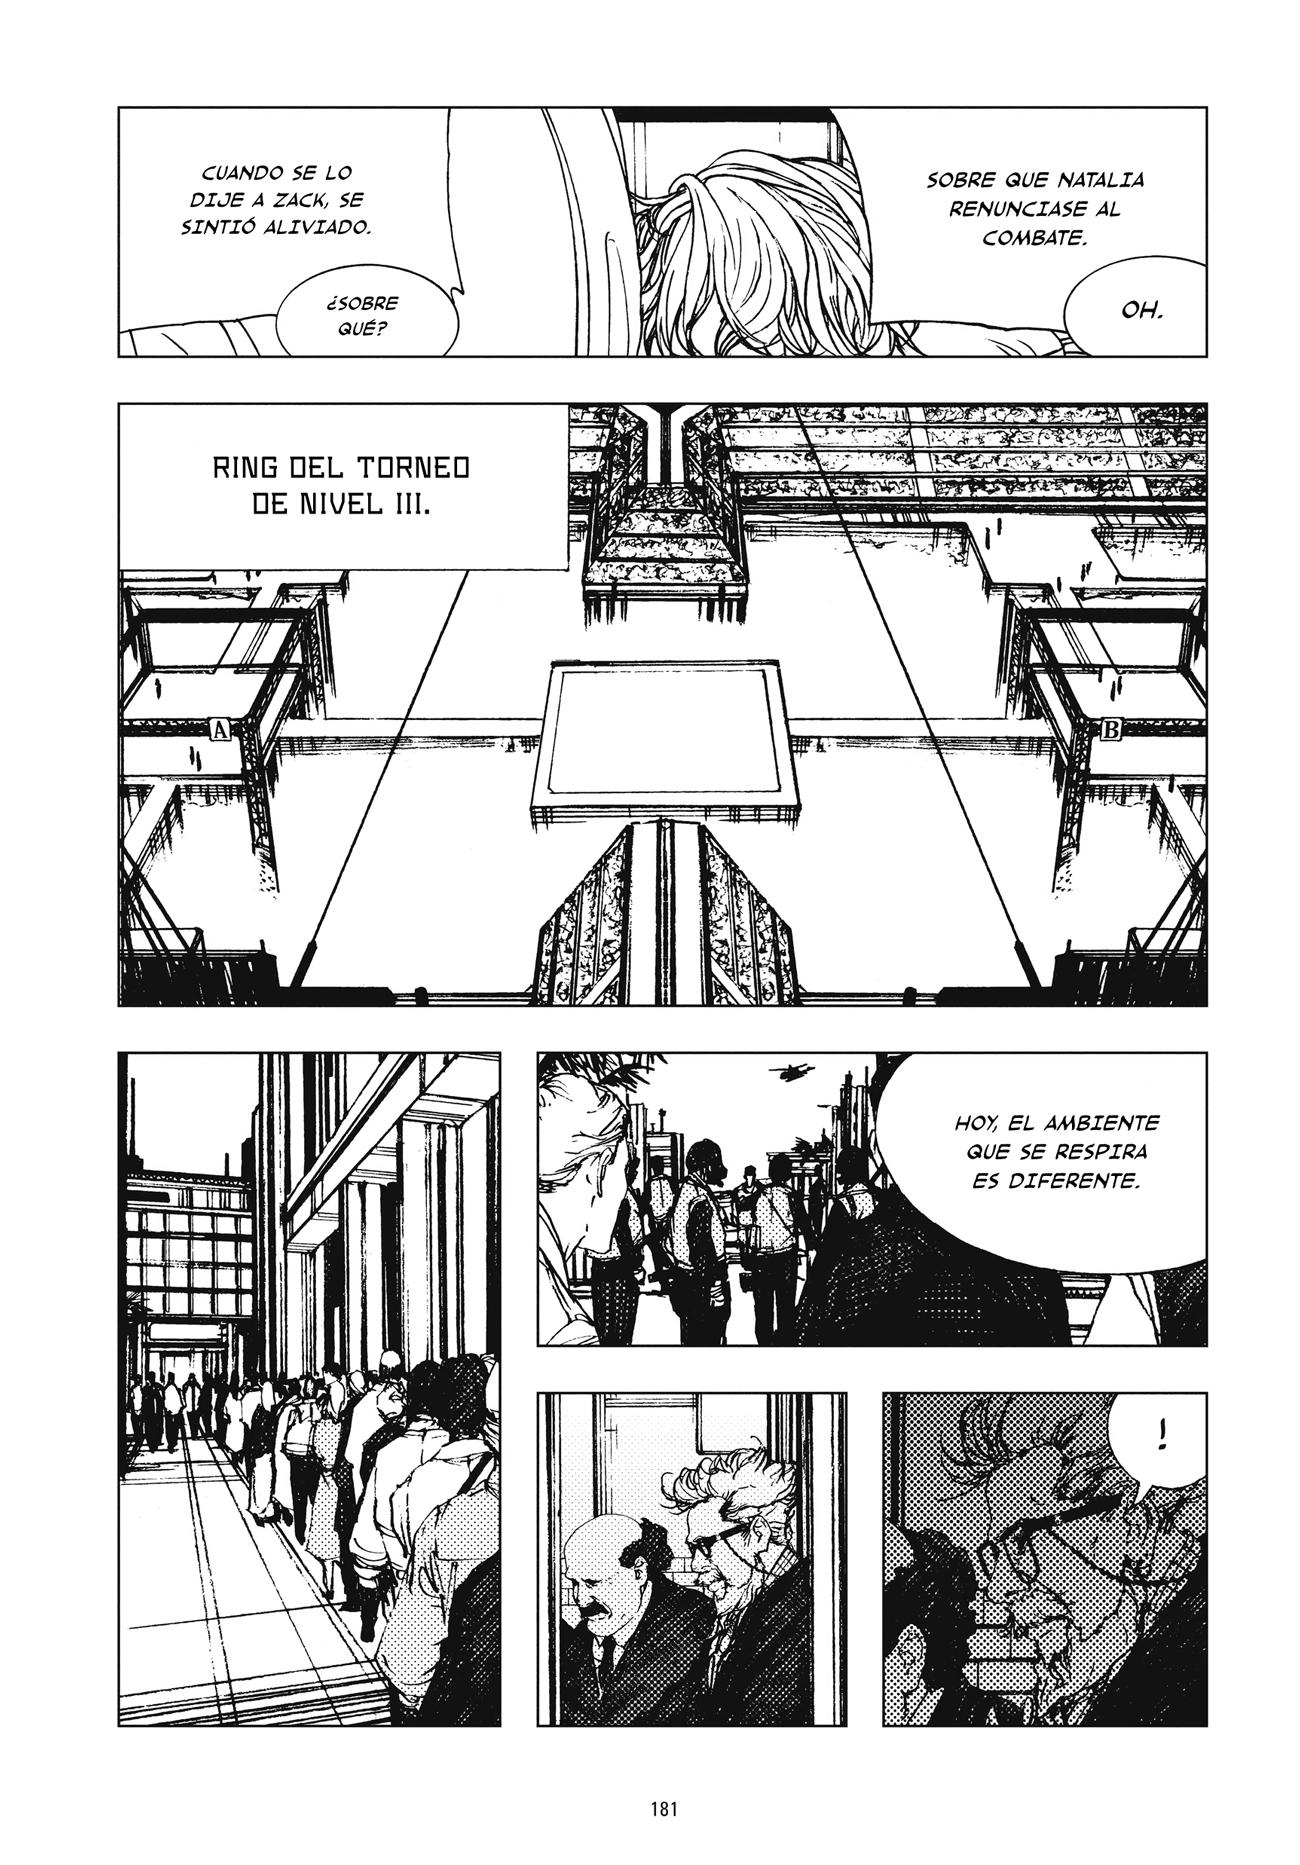 Levius Est Capitulo 23 Leer Manga En Linea Gratis Espanol